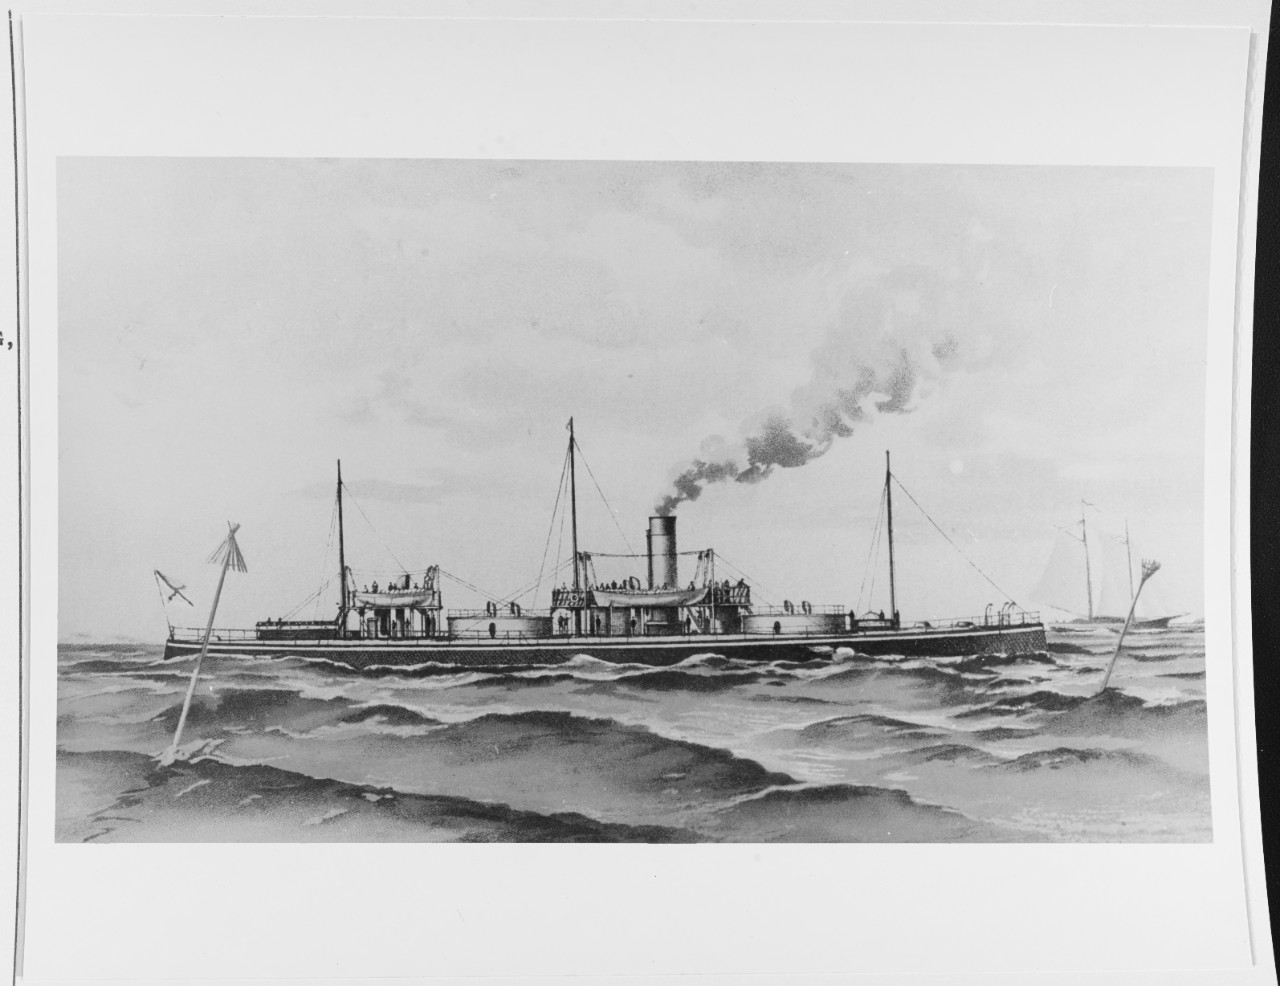 SMERTCH(Russian coast-defense ship, 1864)